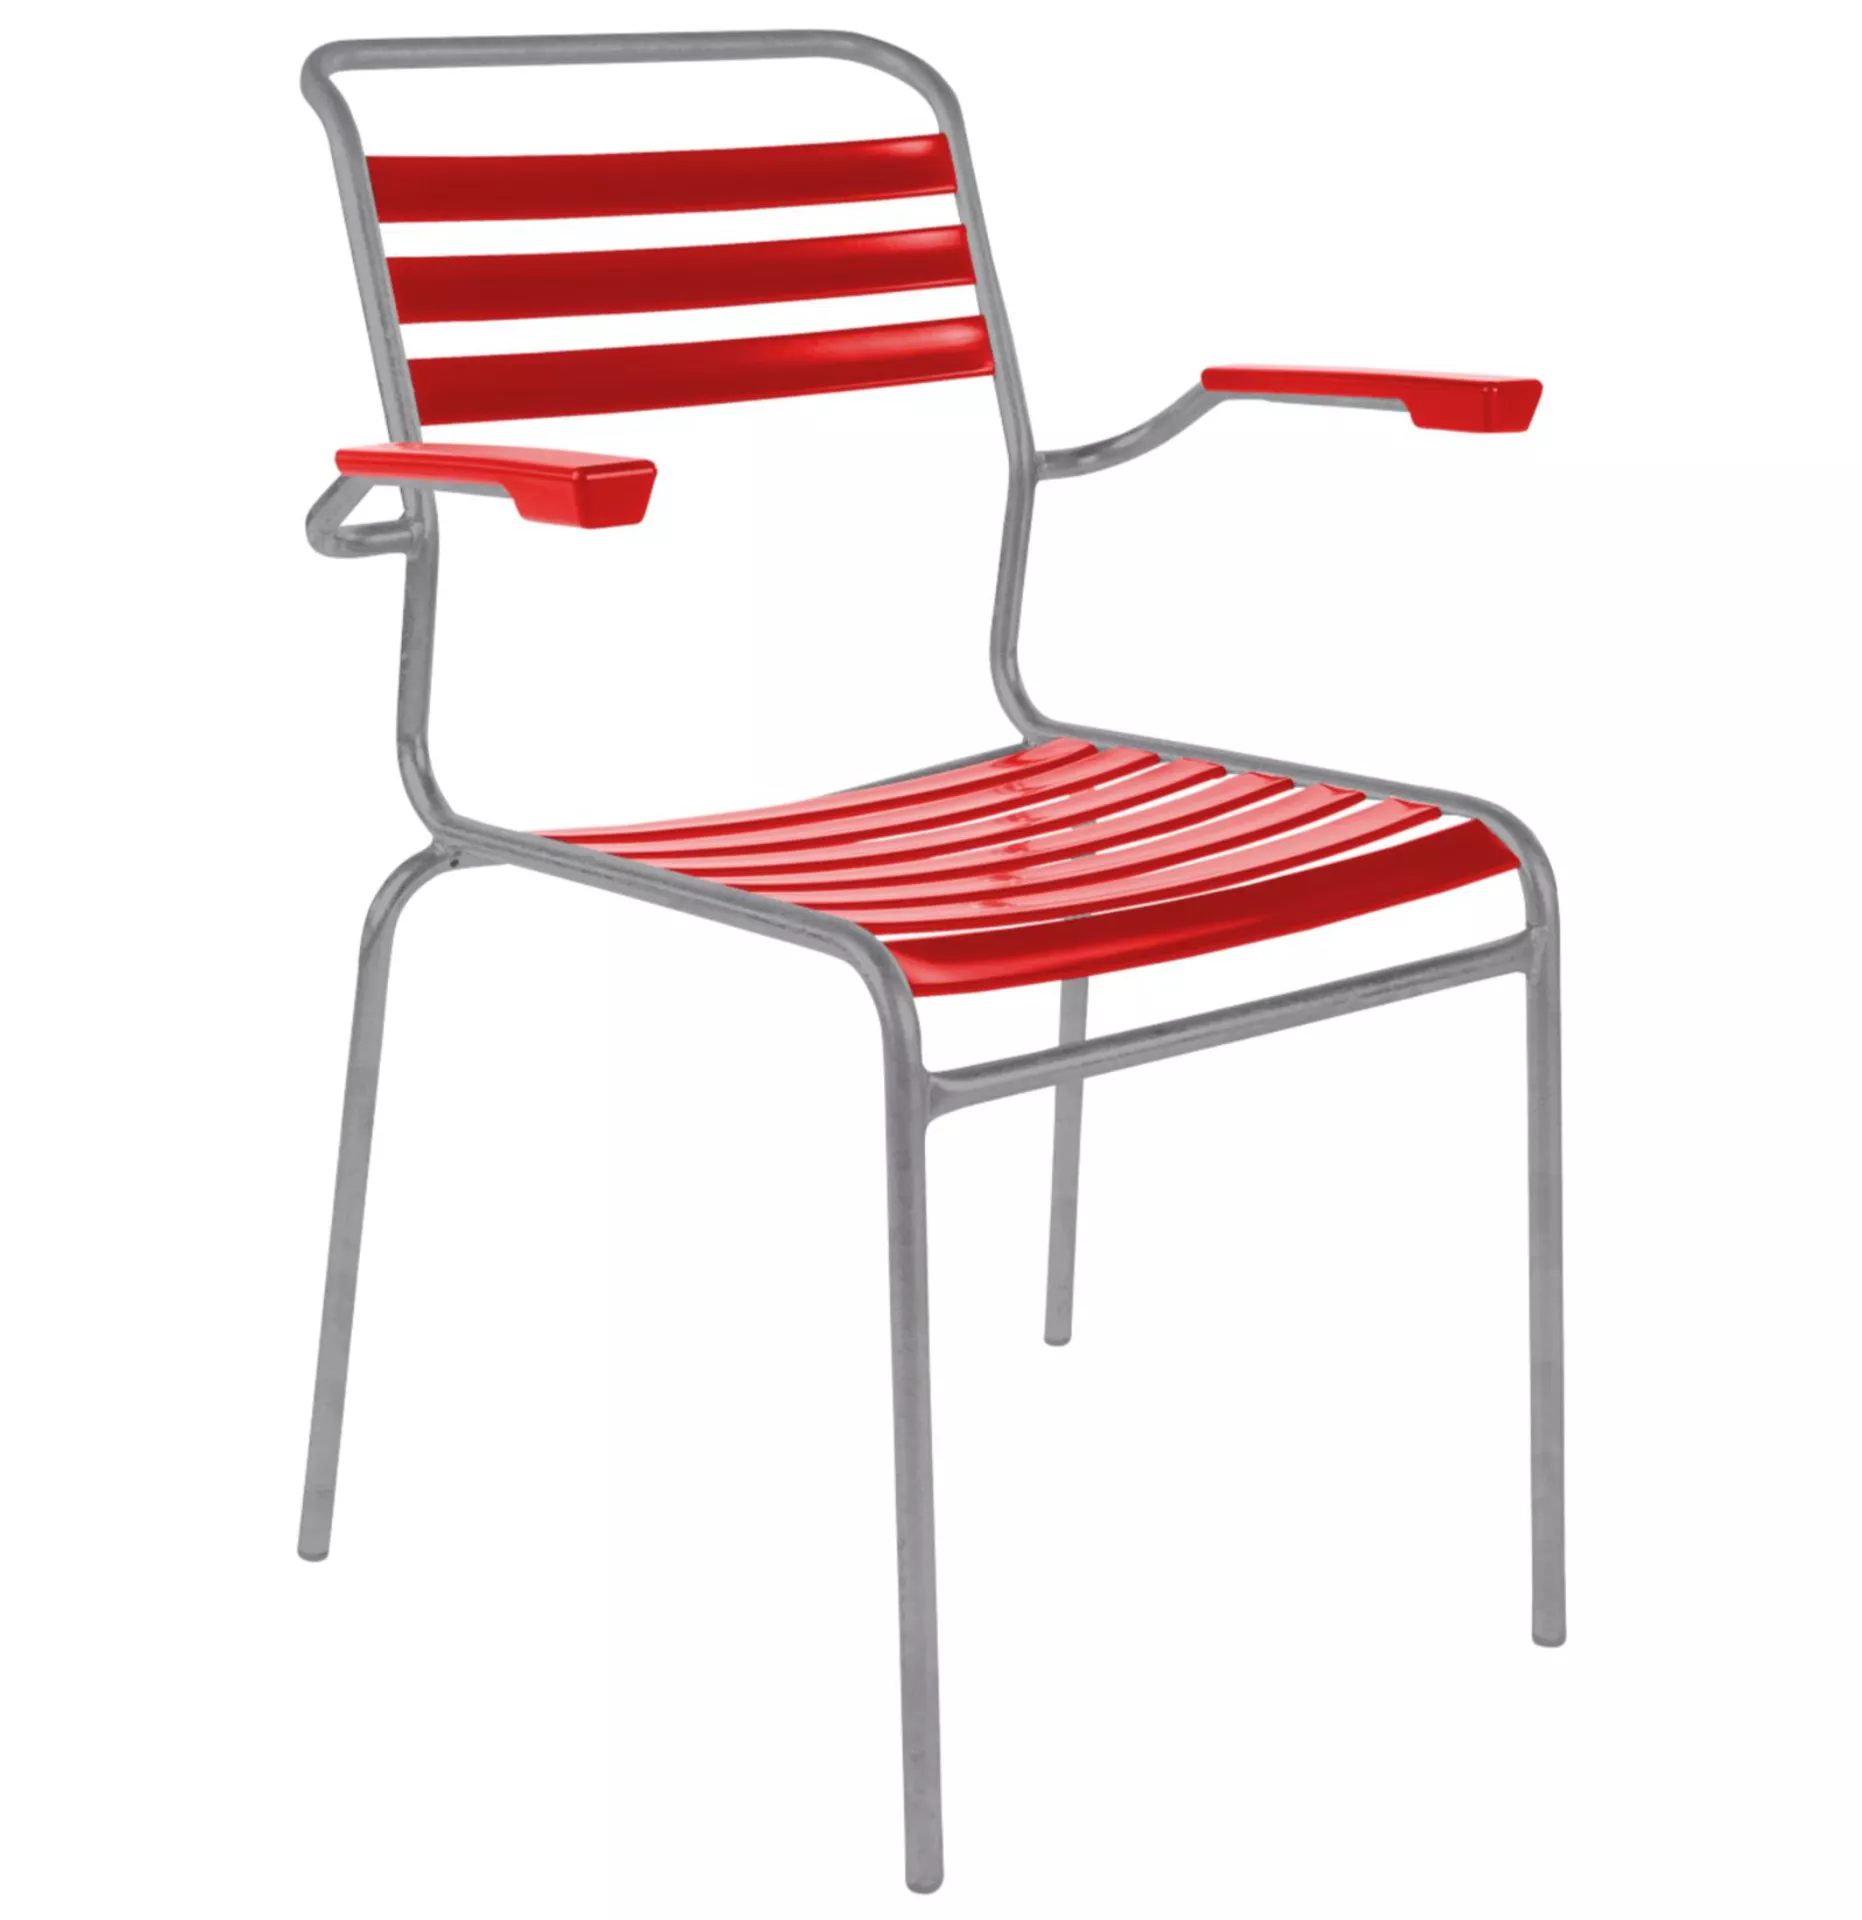 Lättli-Stuhl Säntis mit Armlehnen Schaffner / Farbe: Rot